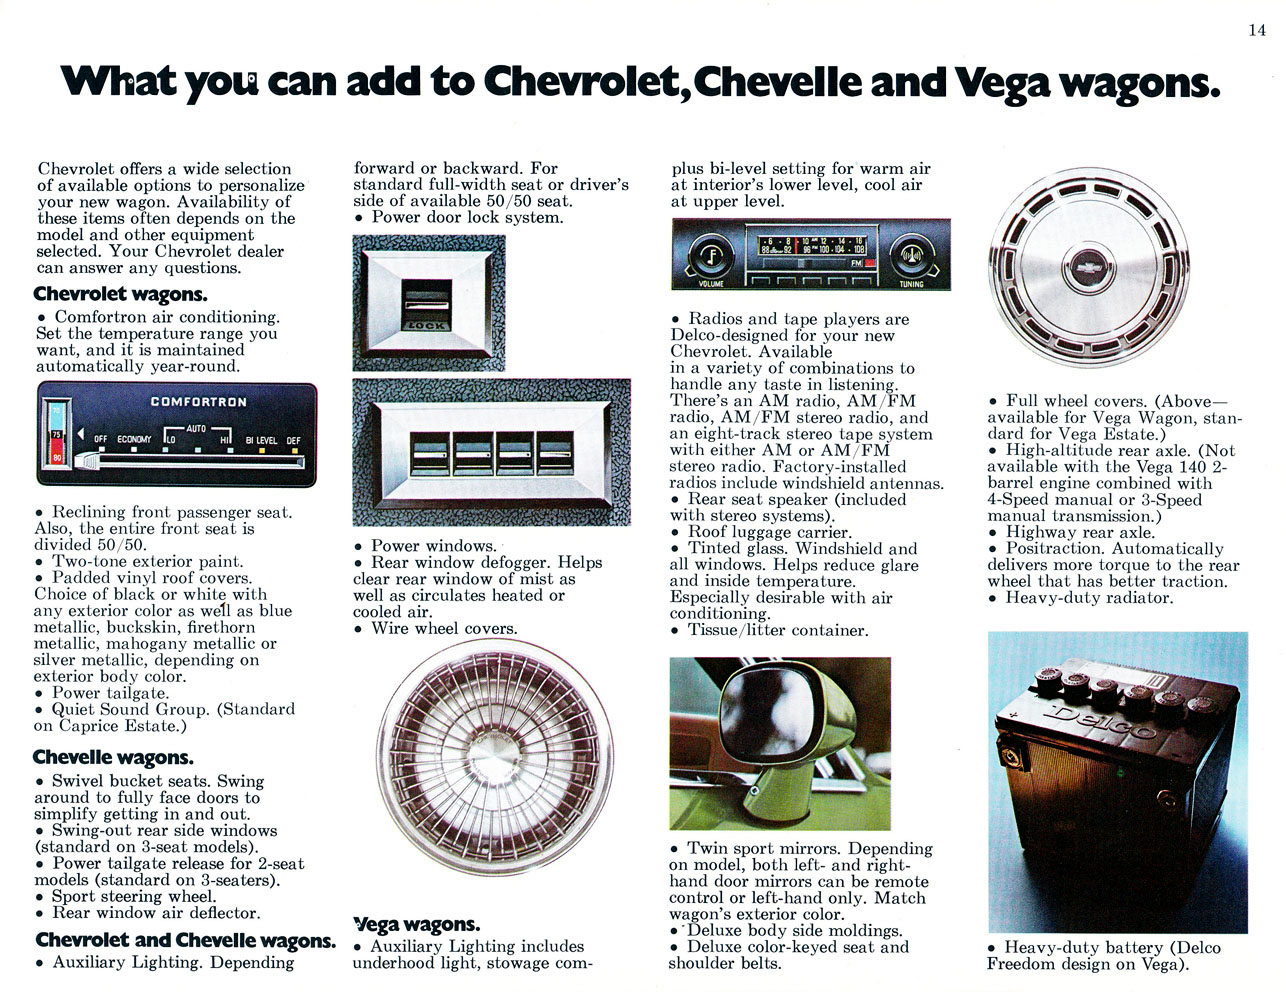 1976 Chevrolet Wagons-14